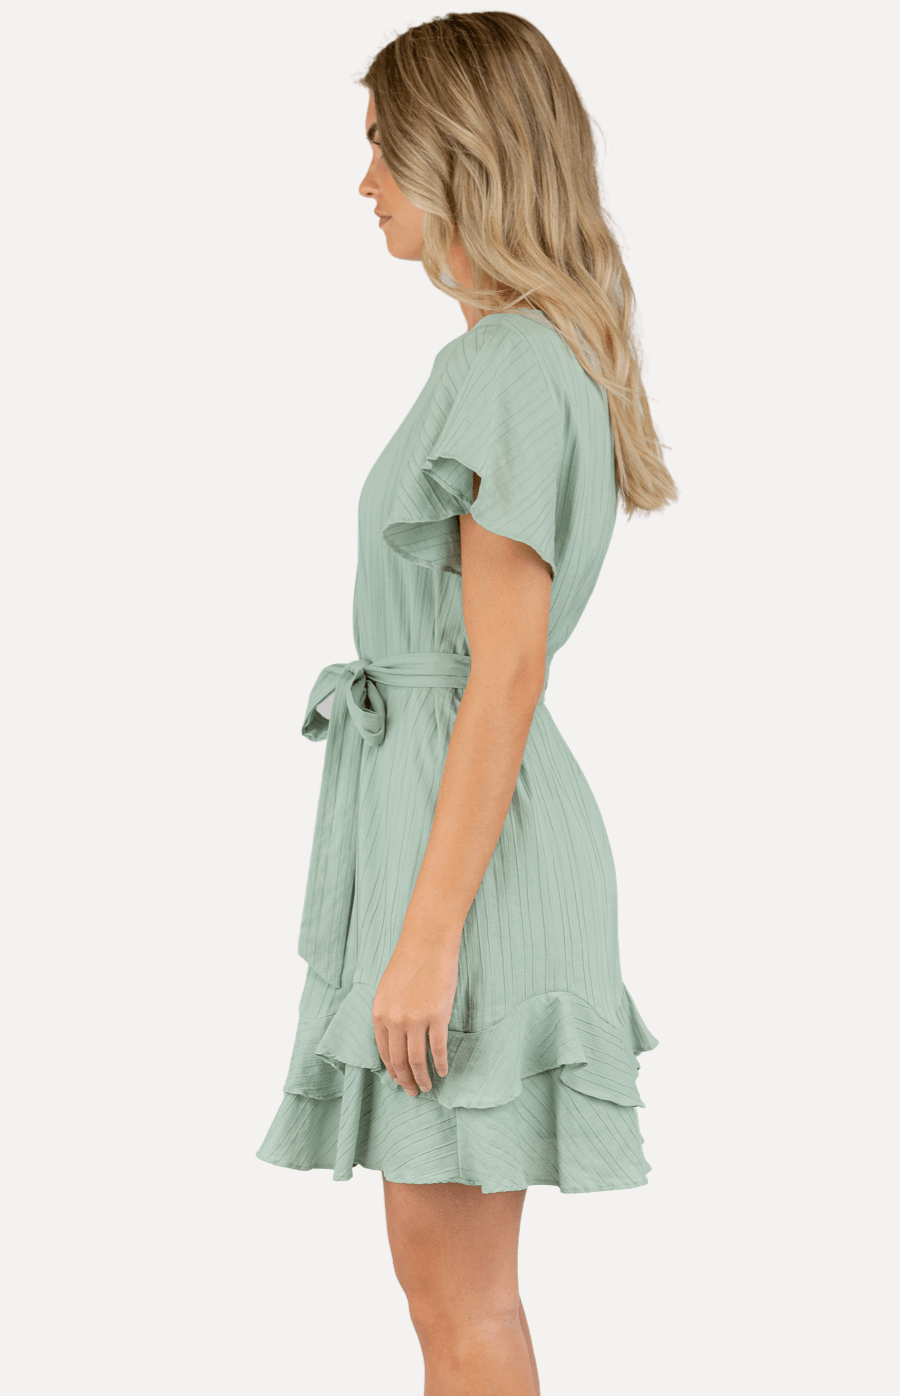 Evee Mini Dress in Mint - Ophelia Fox Boutique